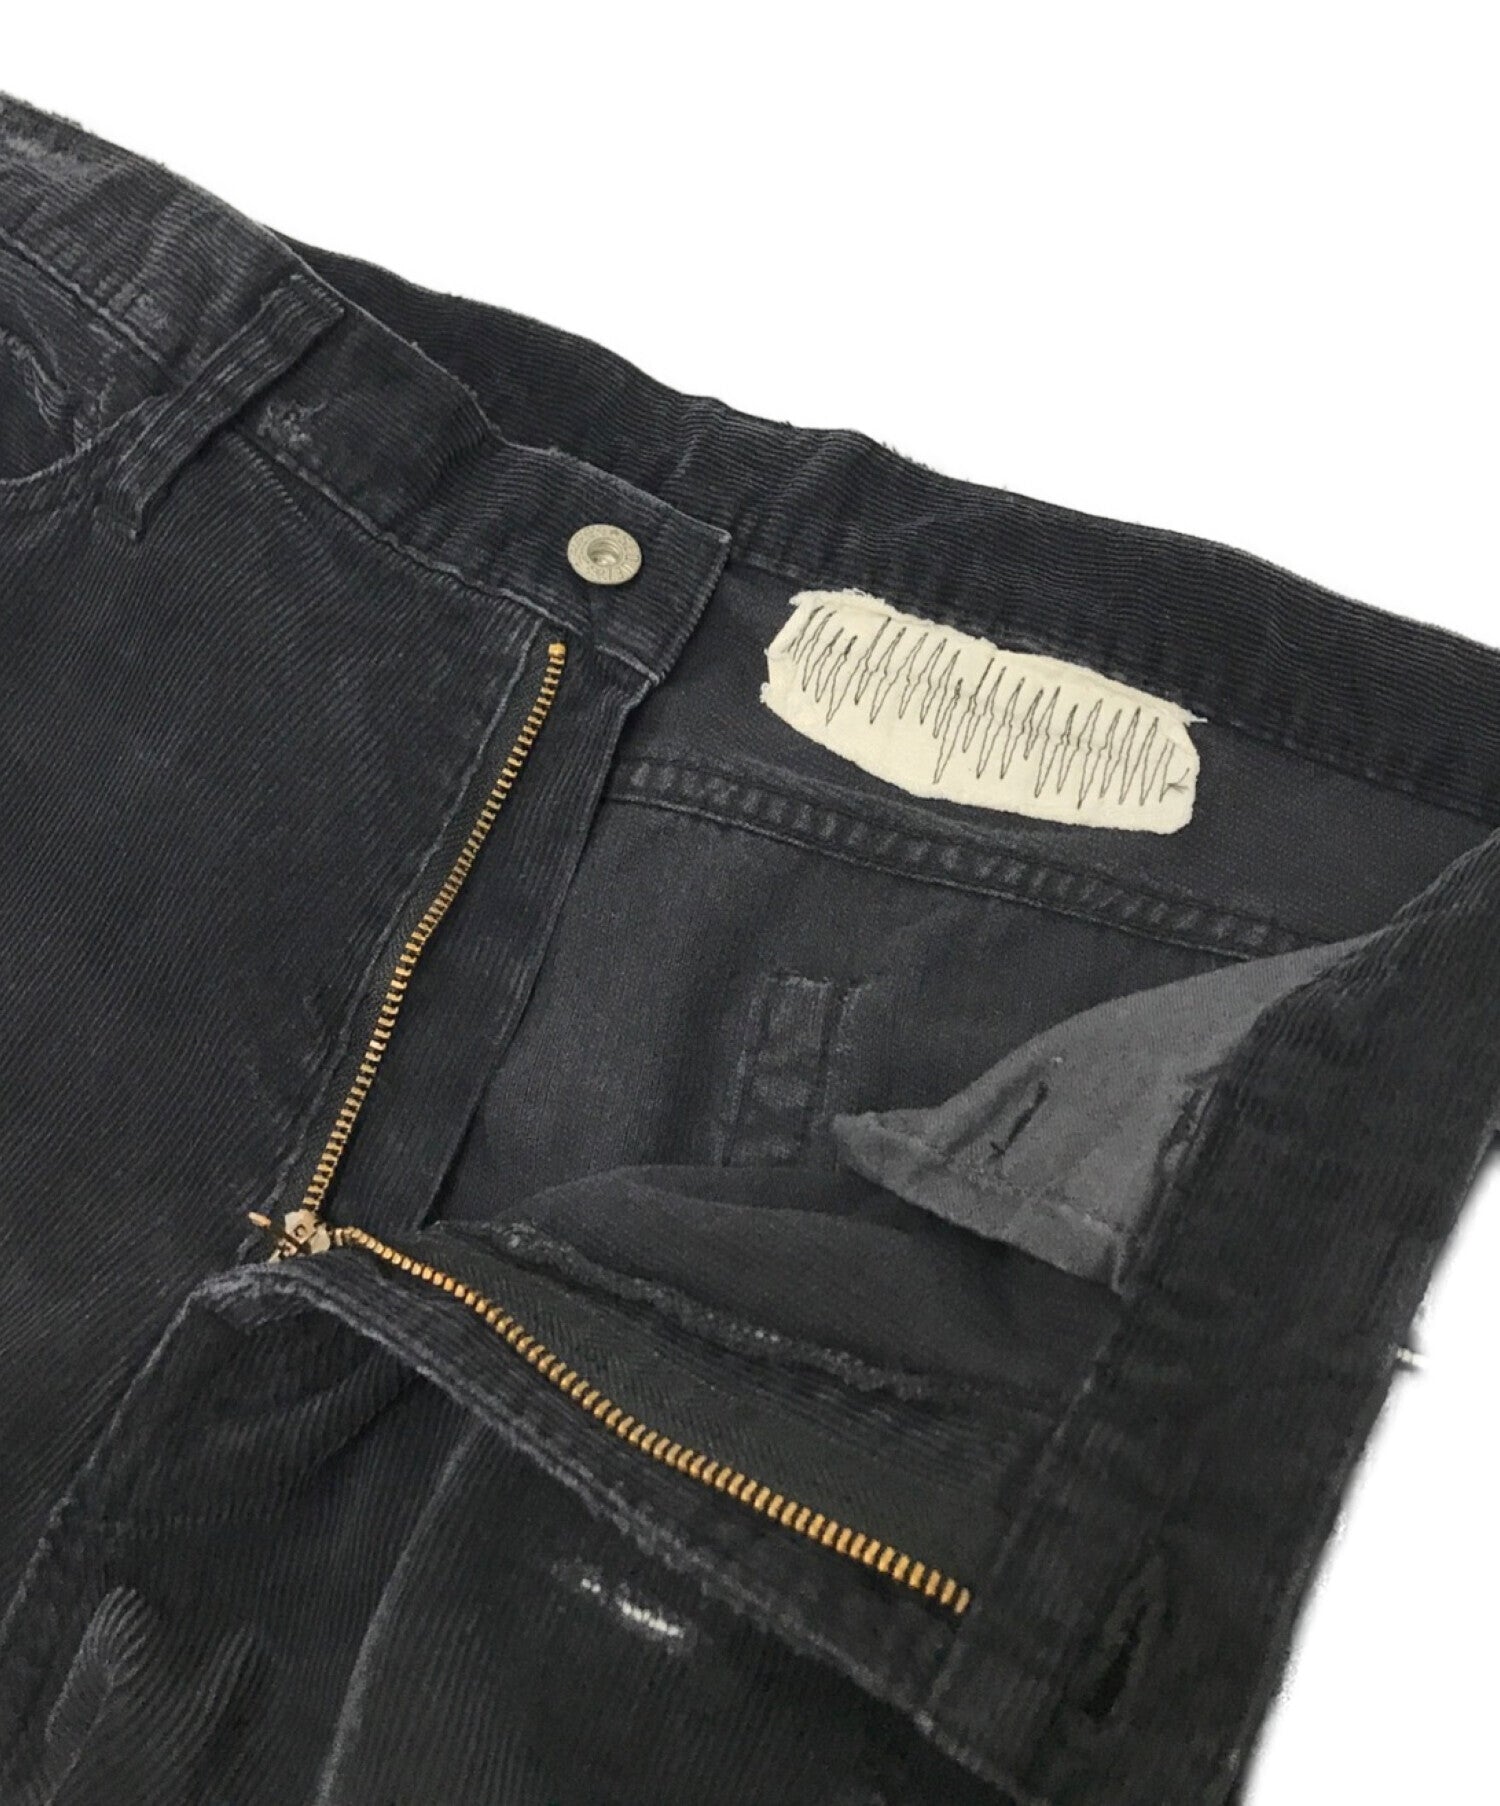 Men's Slim Straight Corduroy 5-pocket Pants - Goodfellow & Co